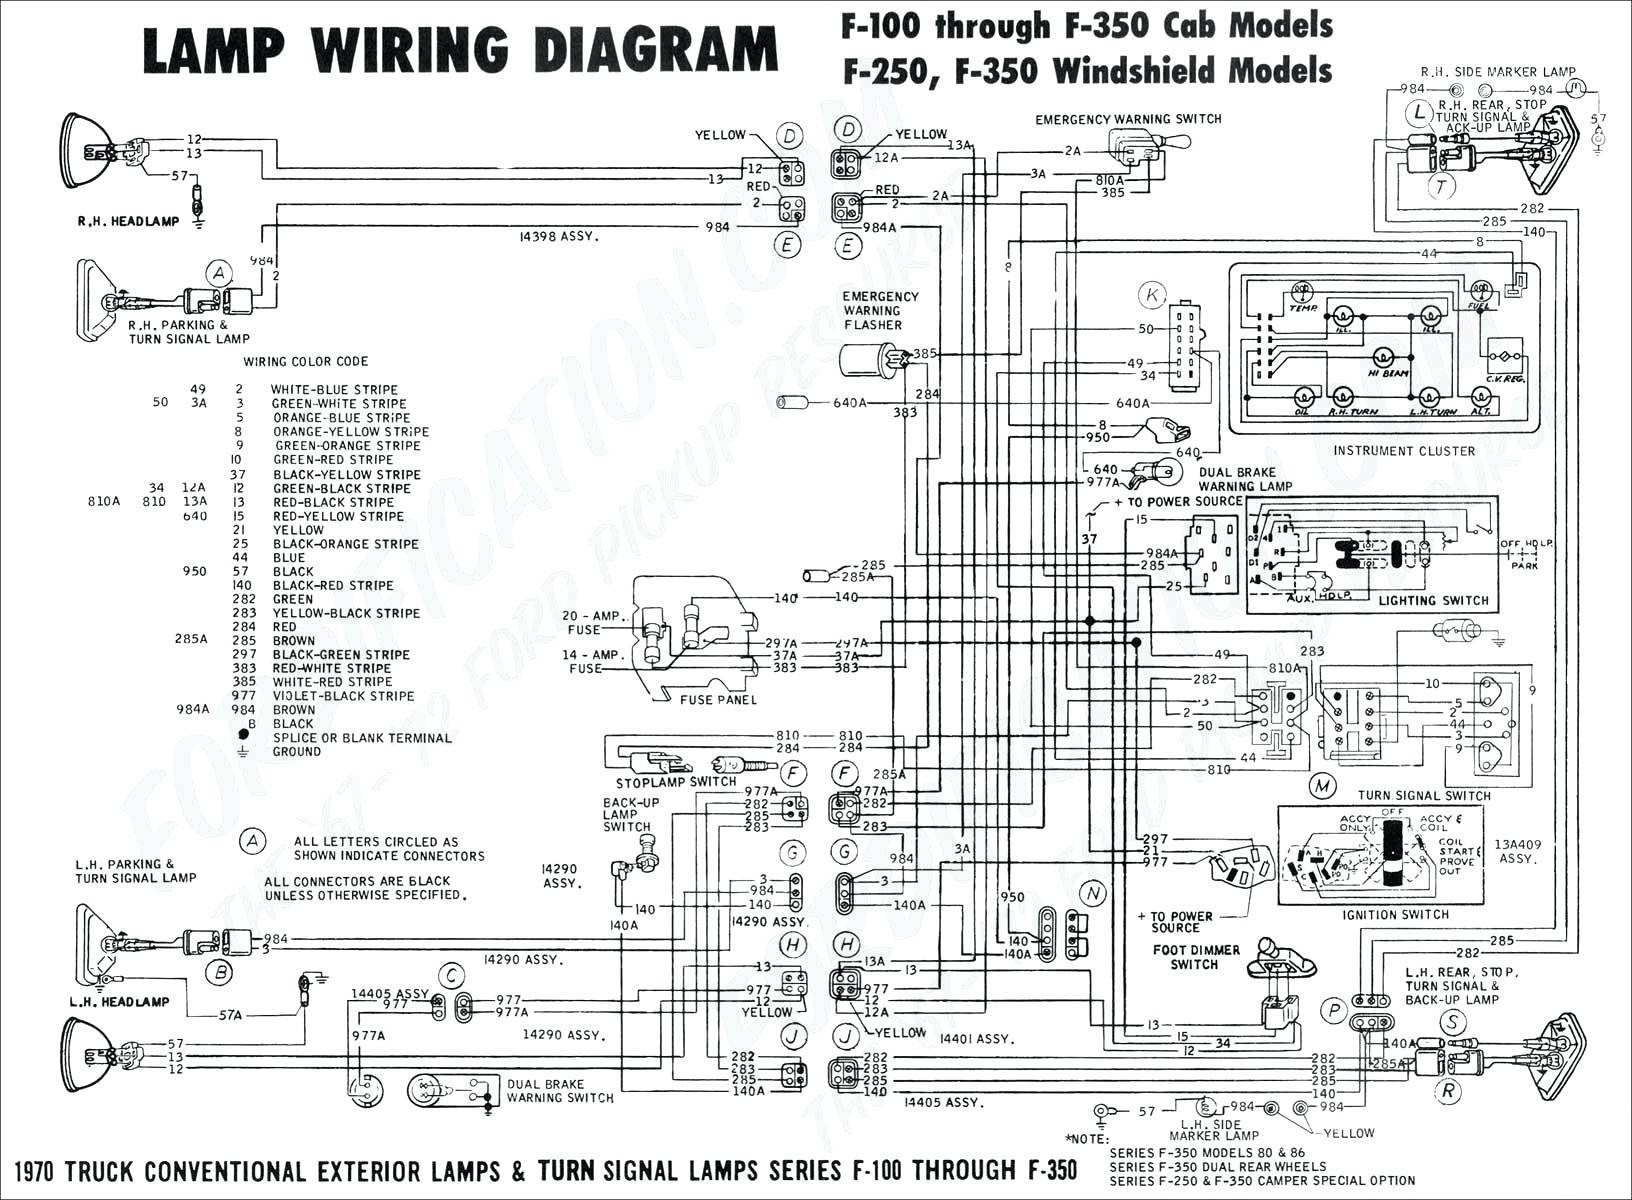 2000 F350 V10 Fuse Diagram Wiring Diagram Datasource 1999 Ford F350 V10 Fuse Panel Layout 1999 Ford F250 V10 Fuse Diagram